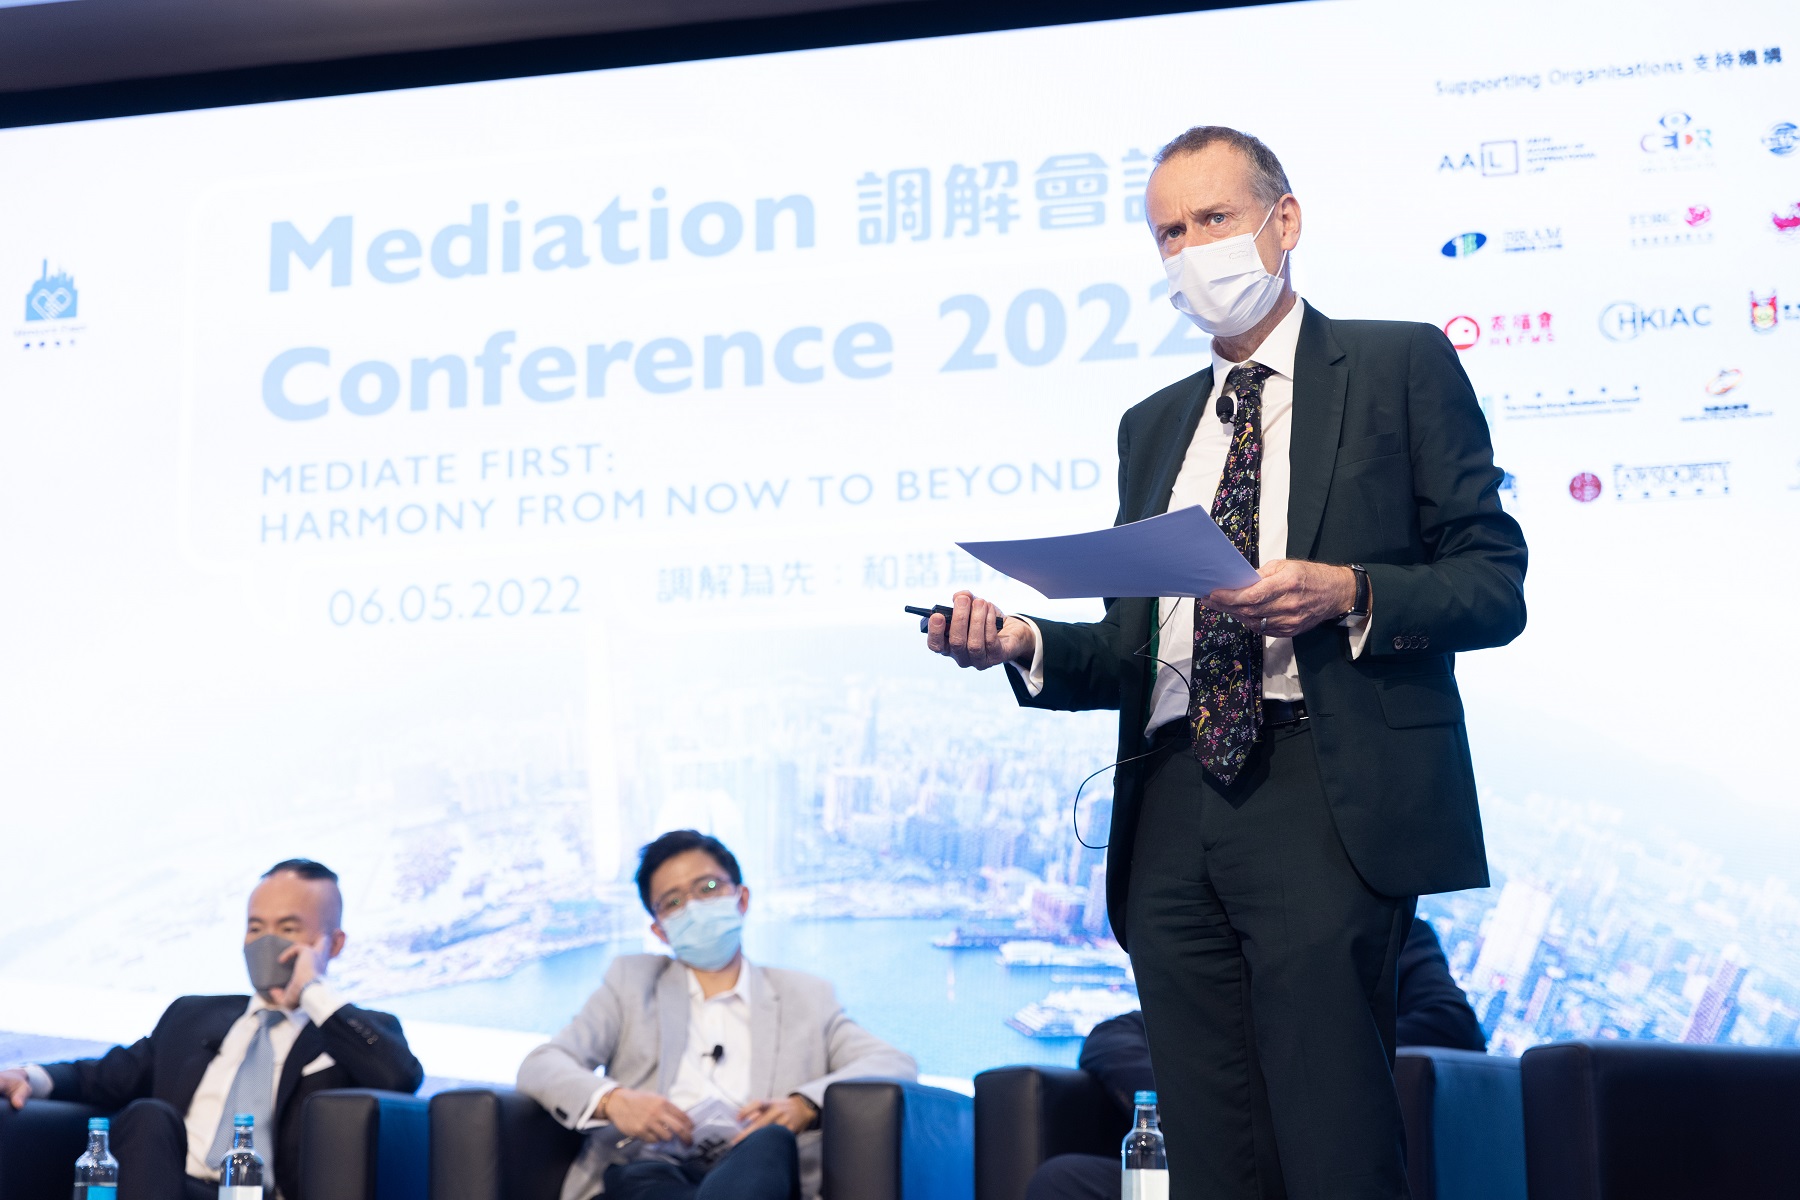 Mediation Conference 2022 12